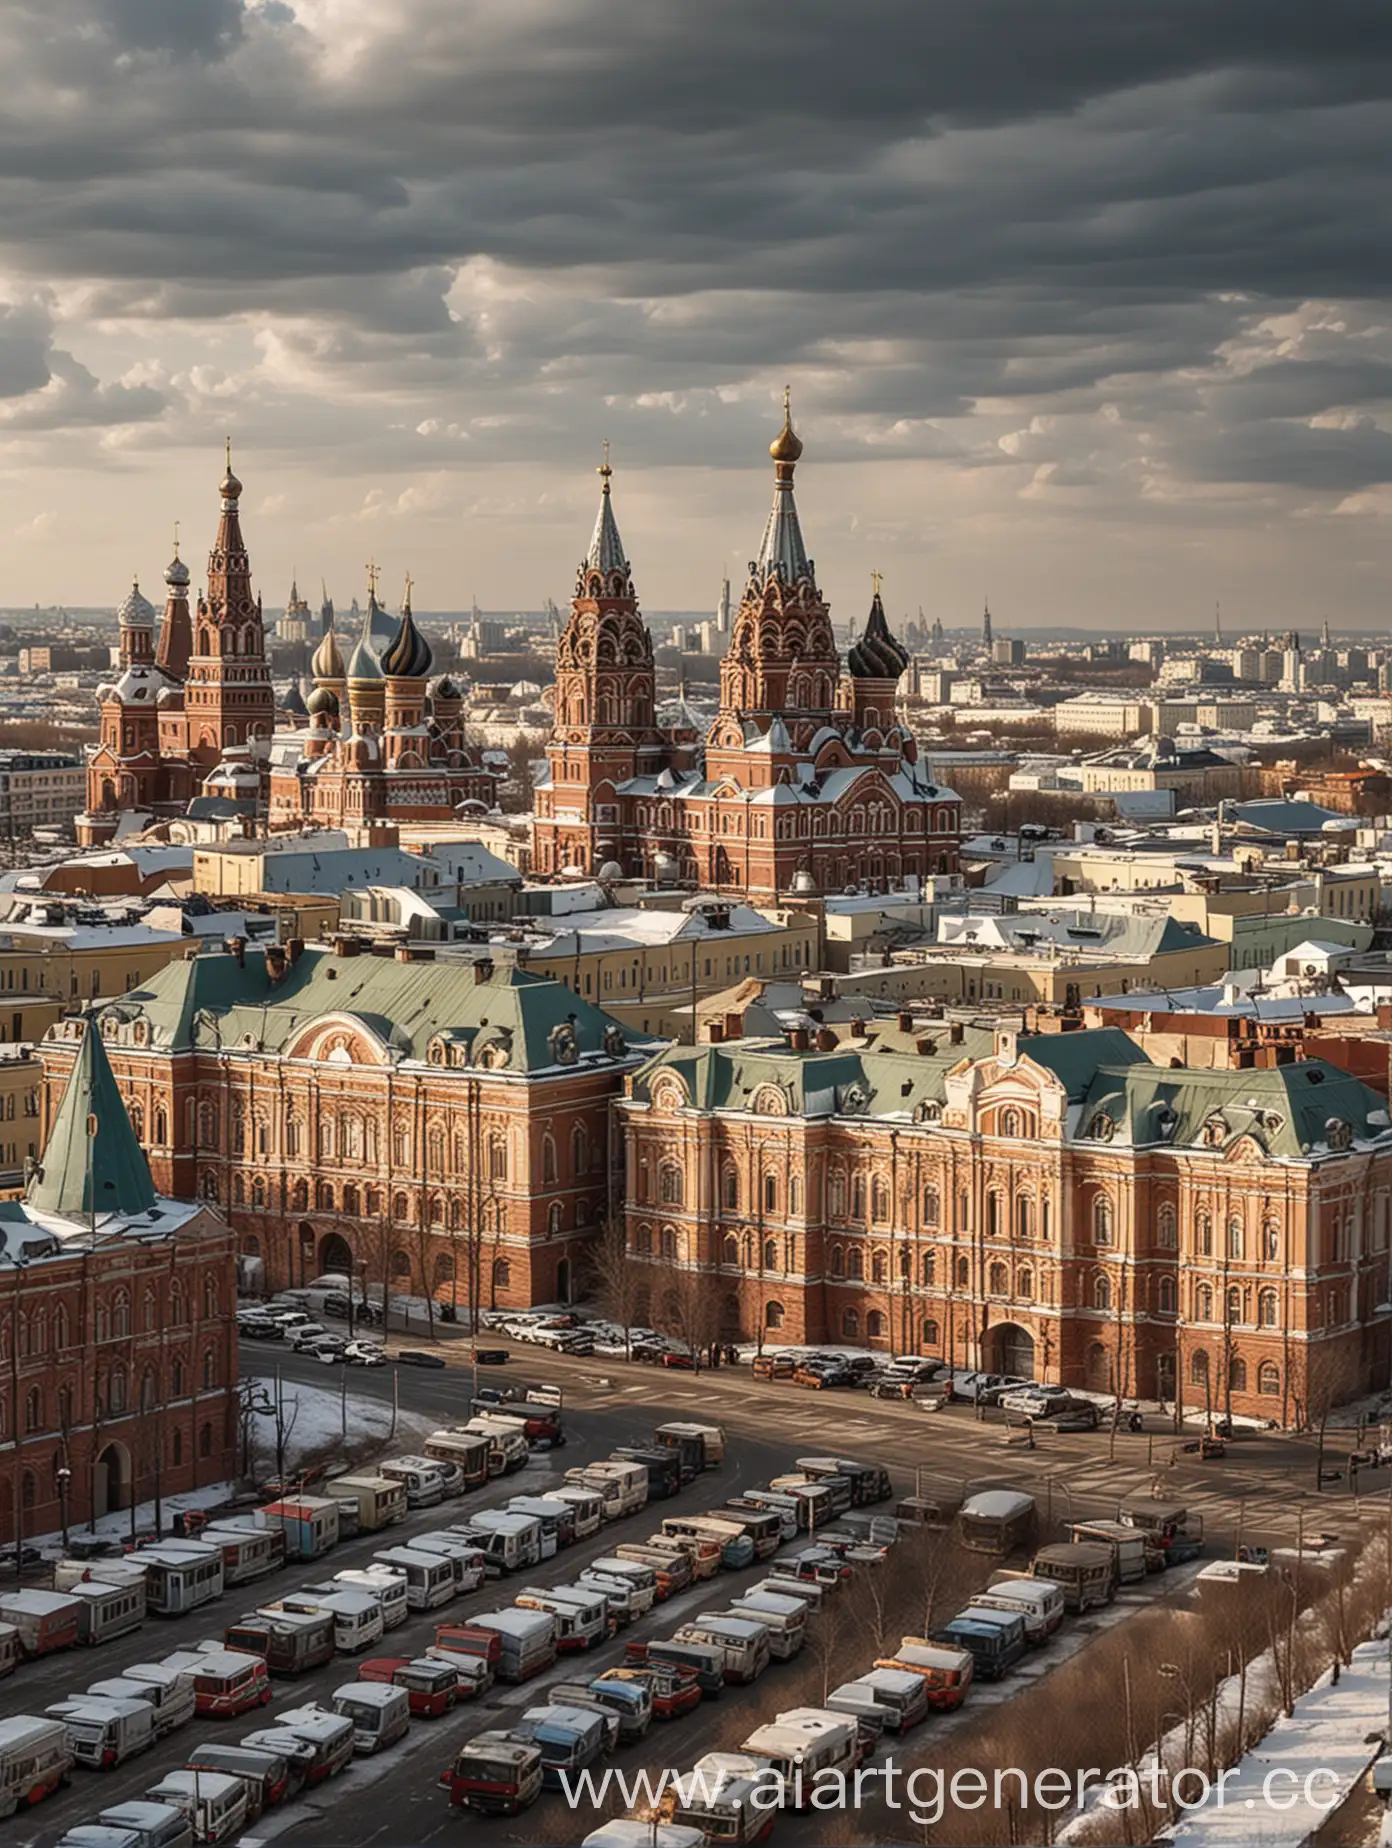 Modern-Urbanistics-in-Russia-Contemporary-Cityscape-with-Architectural-Diversity